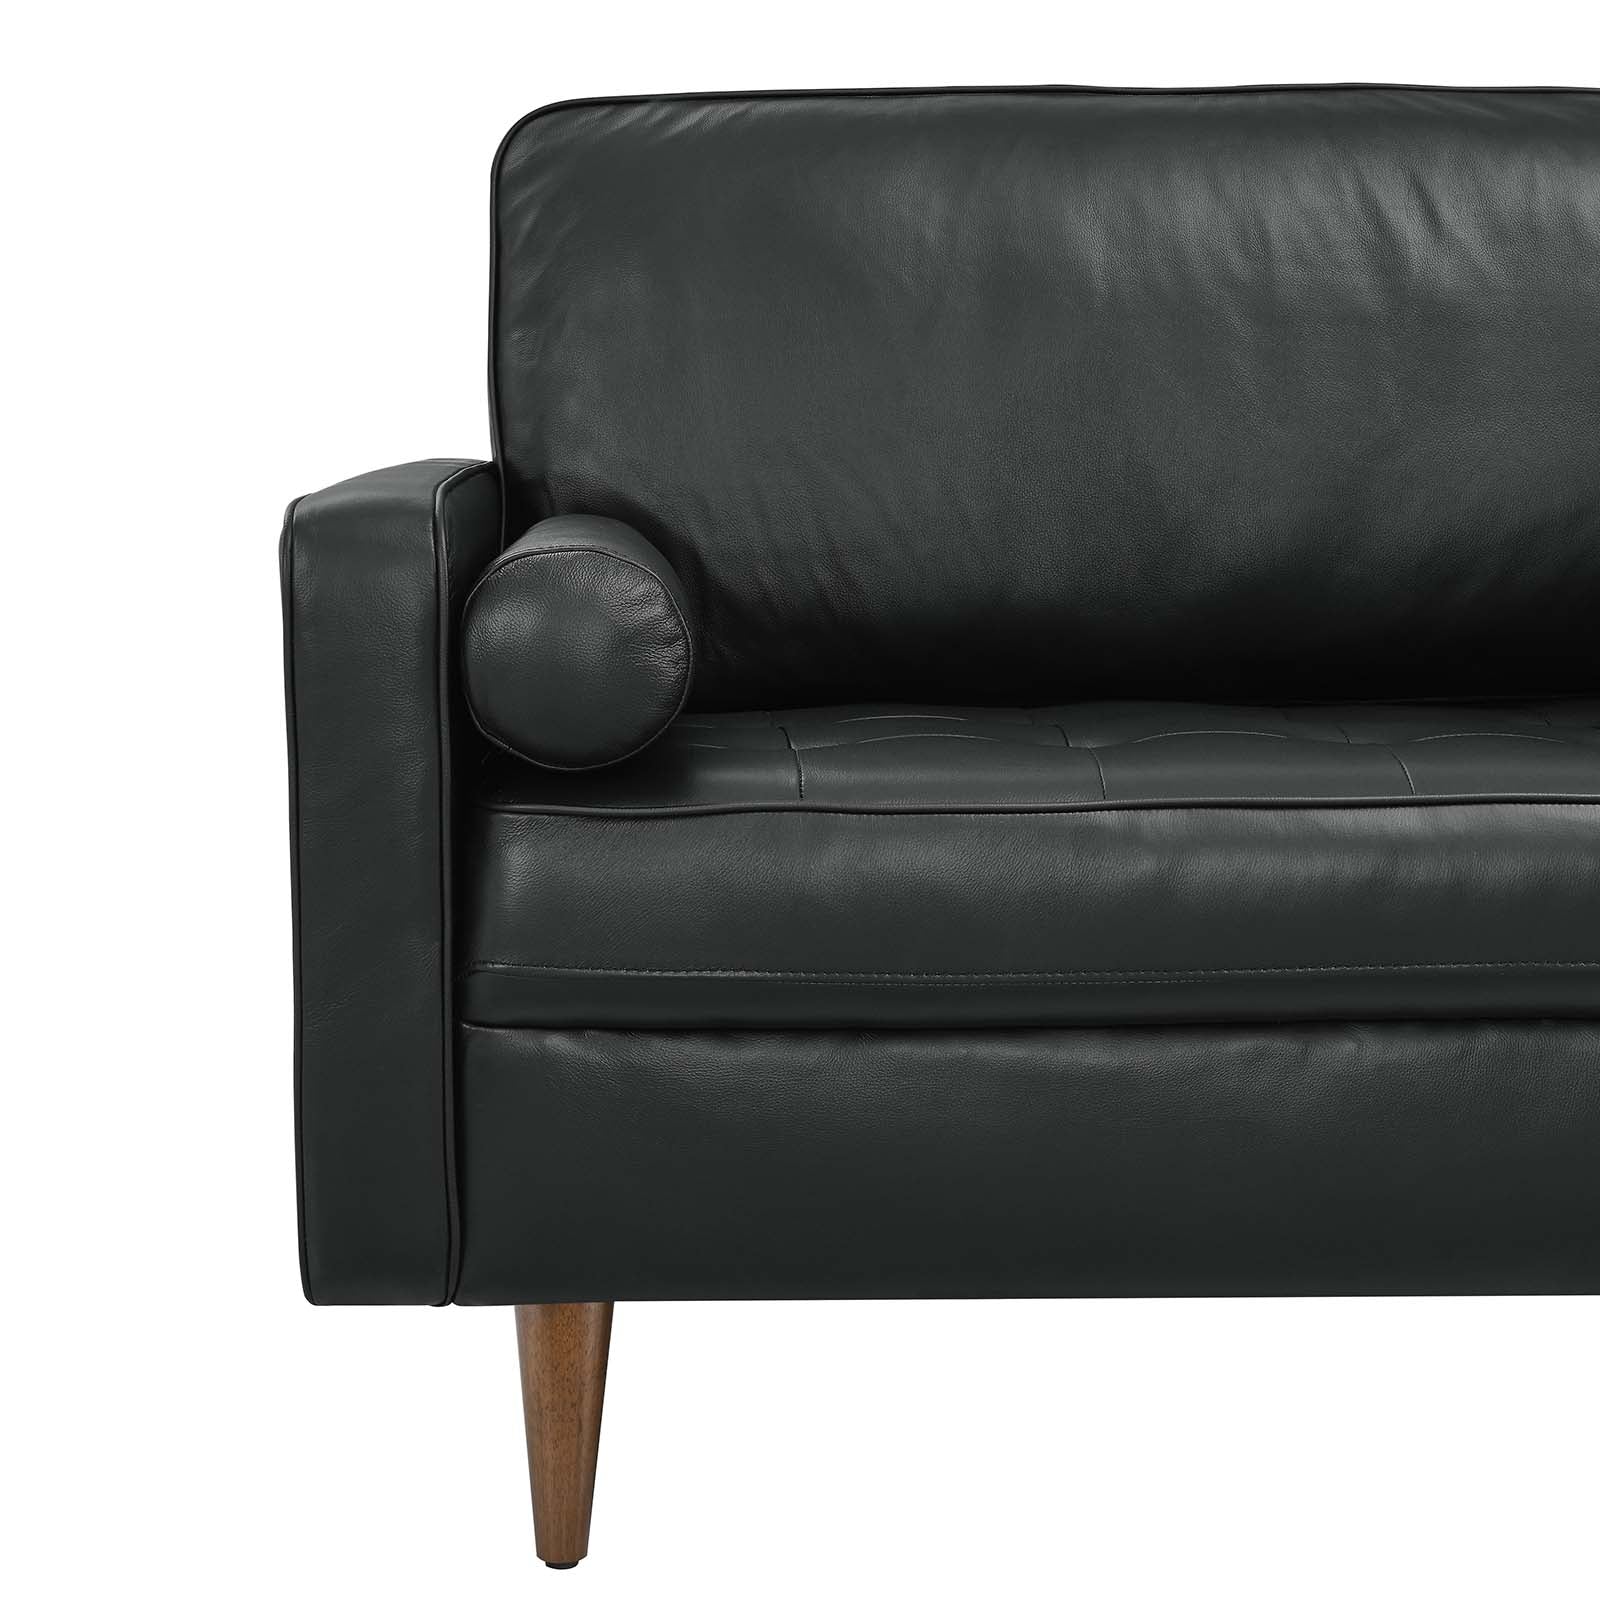 Valour 81" Leather Sofa - East Shore Modern Home Furnishings